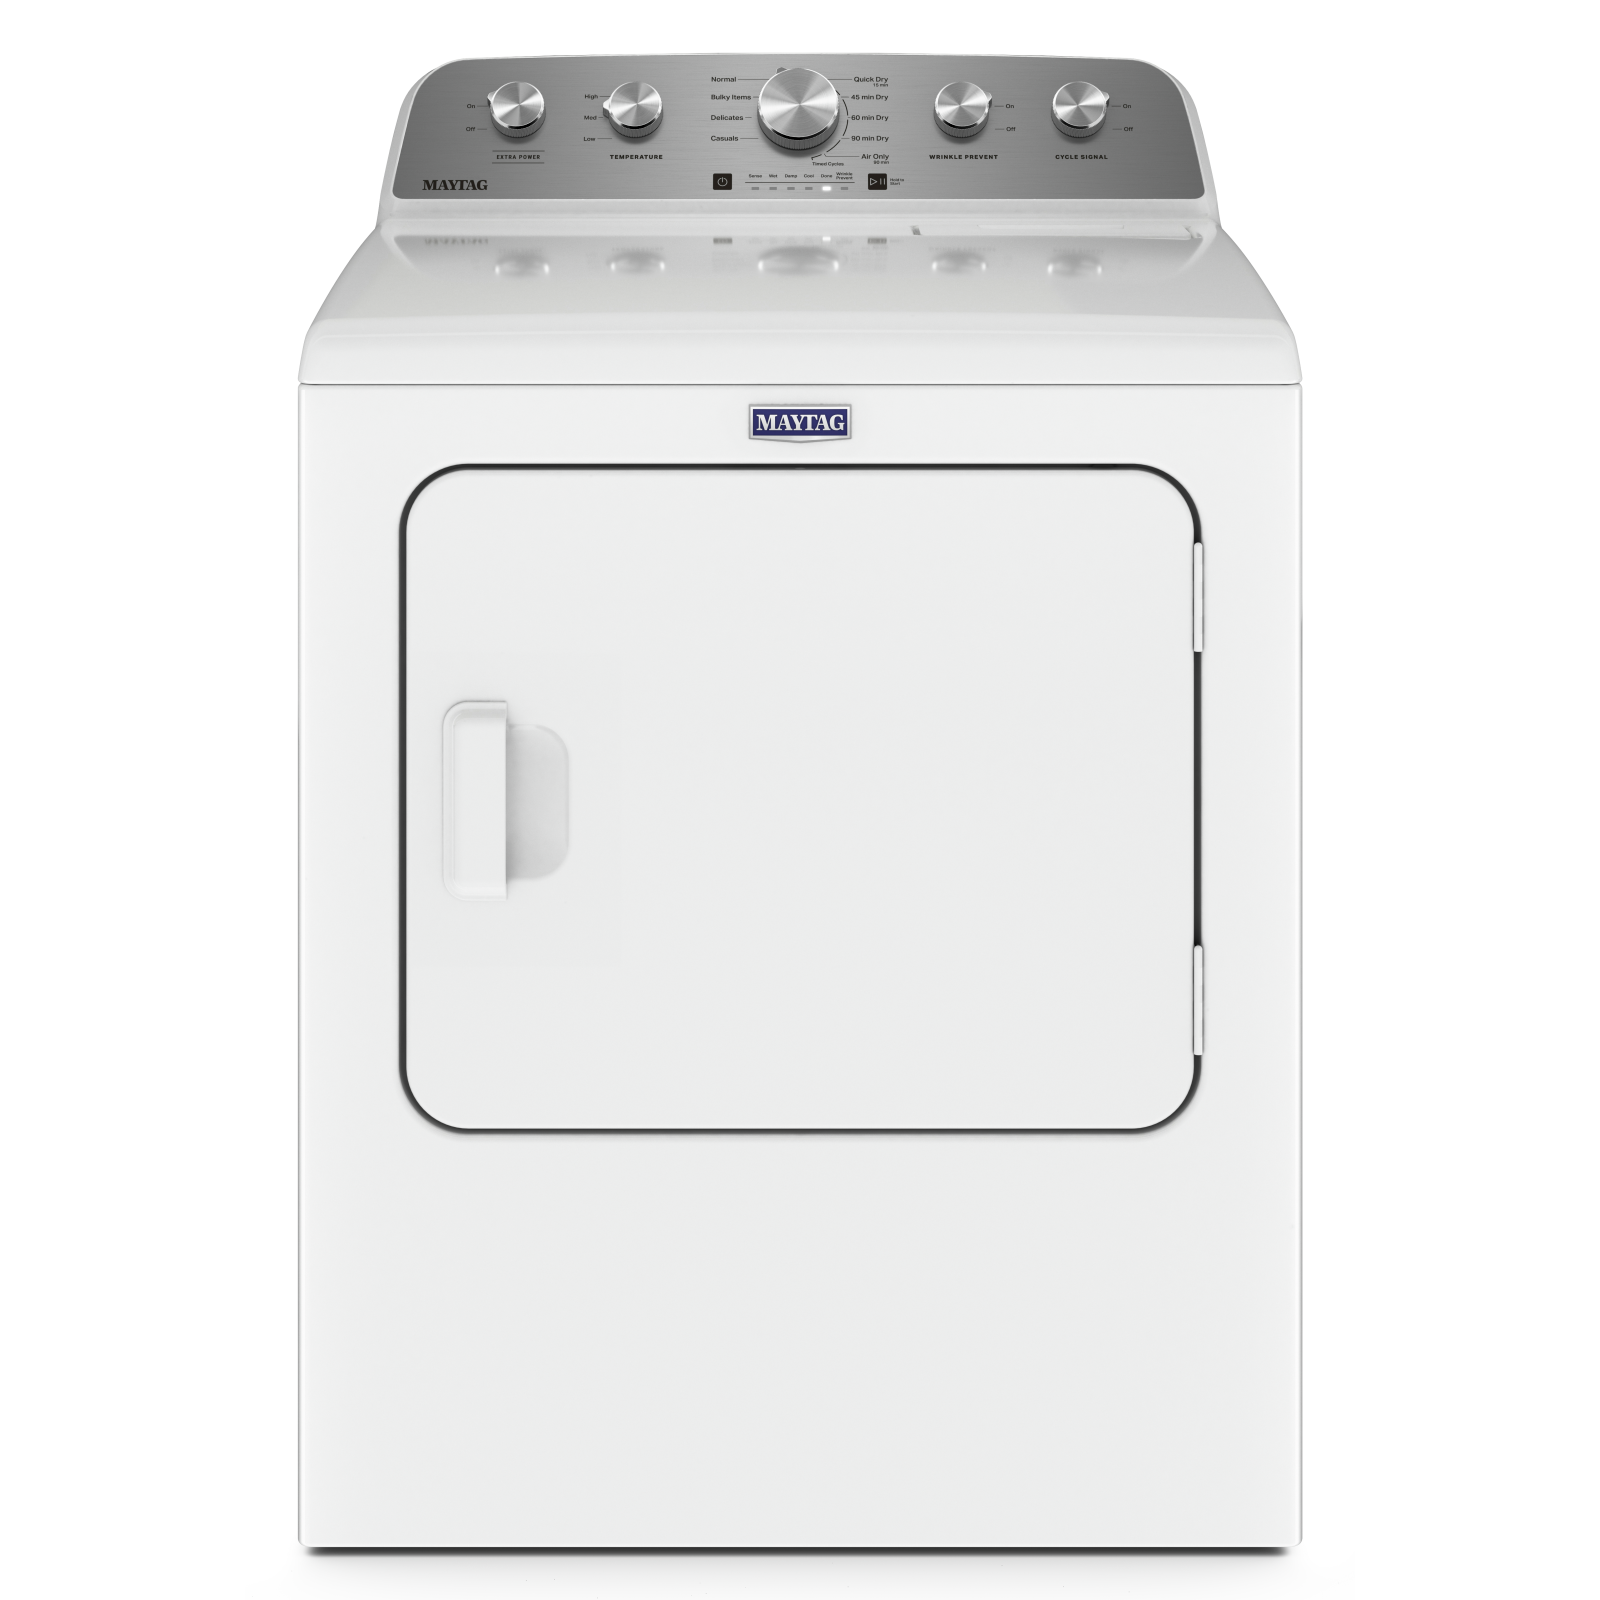 Maytag - 7 cu. Ft  Gas Dryer in White - MGD5030MW